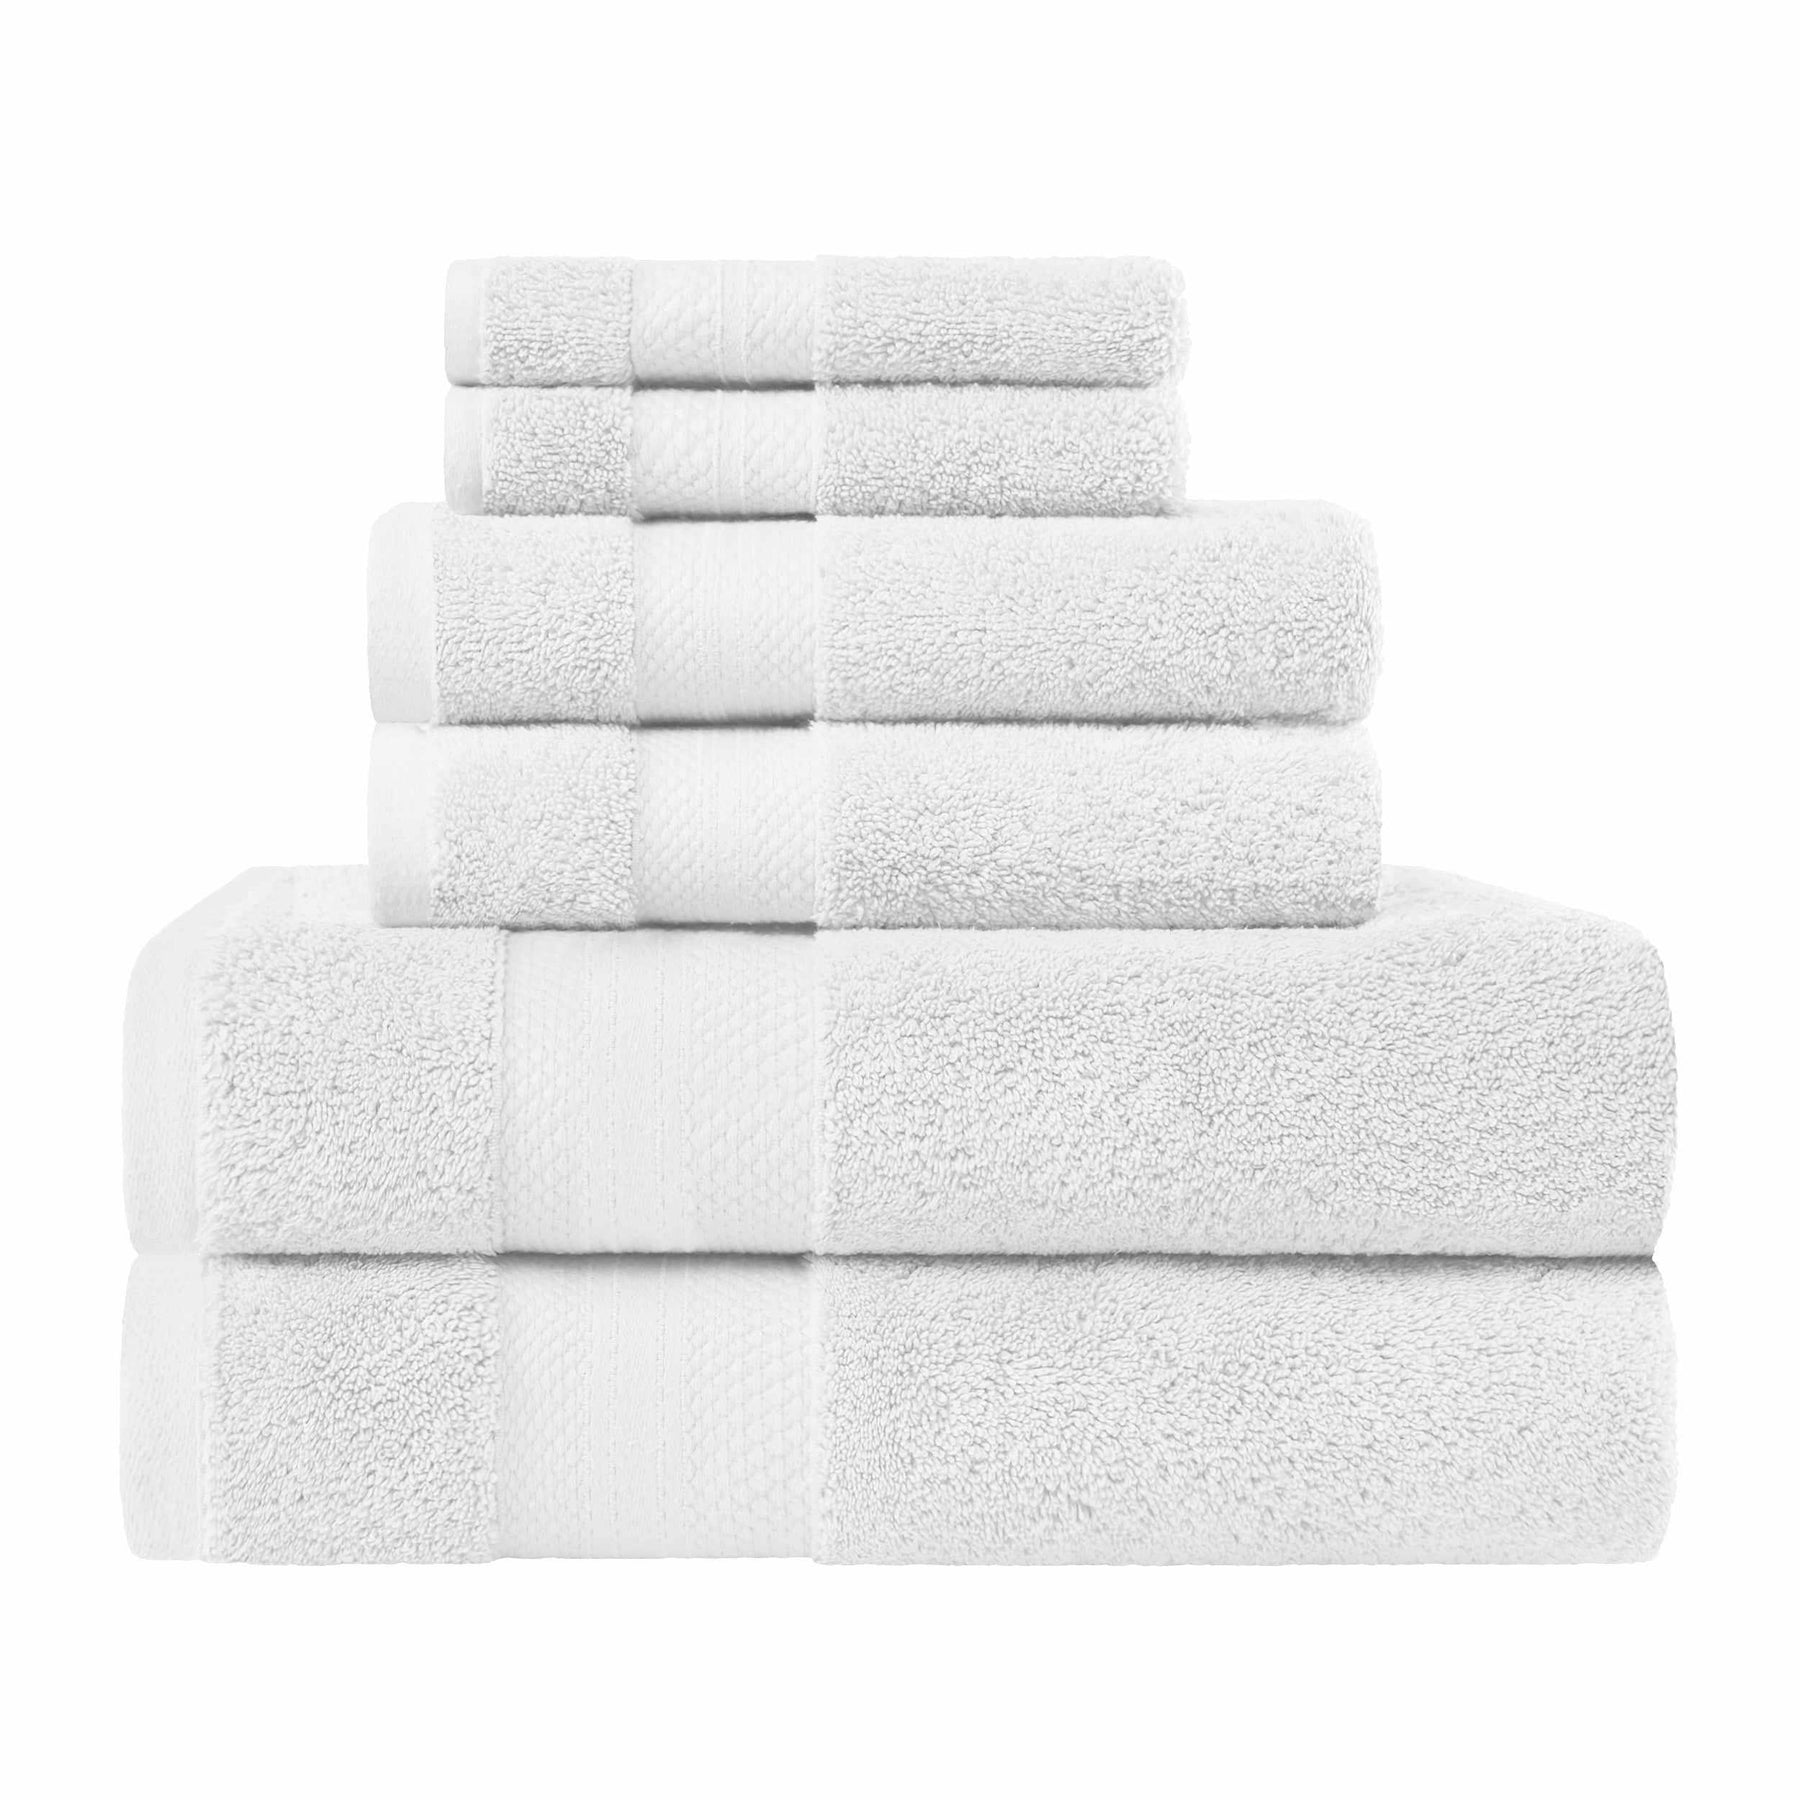  Superior Premium Turkish Cotton Assorted 6-Piece Towel Set - White